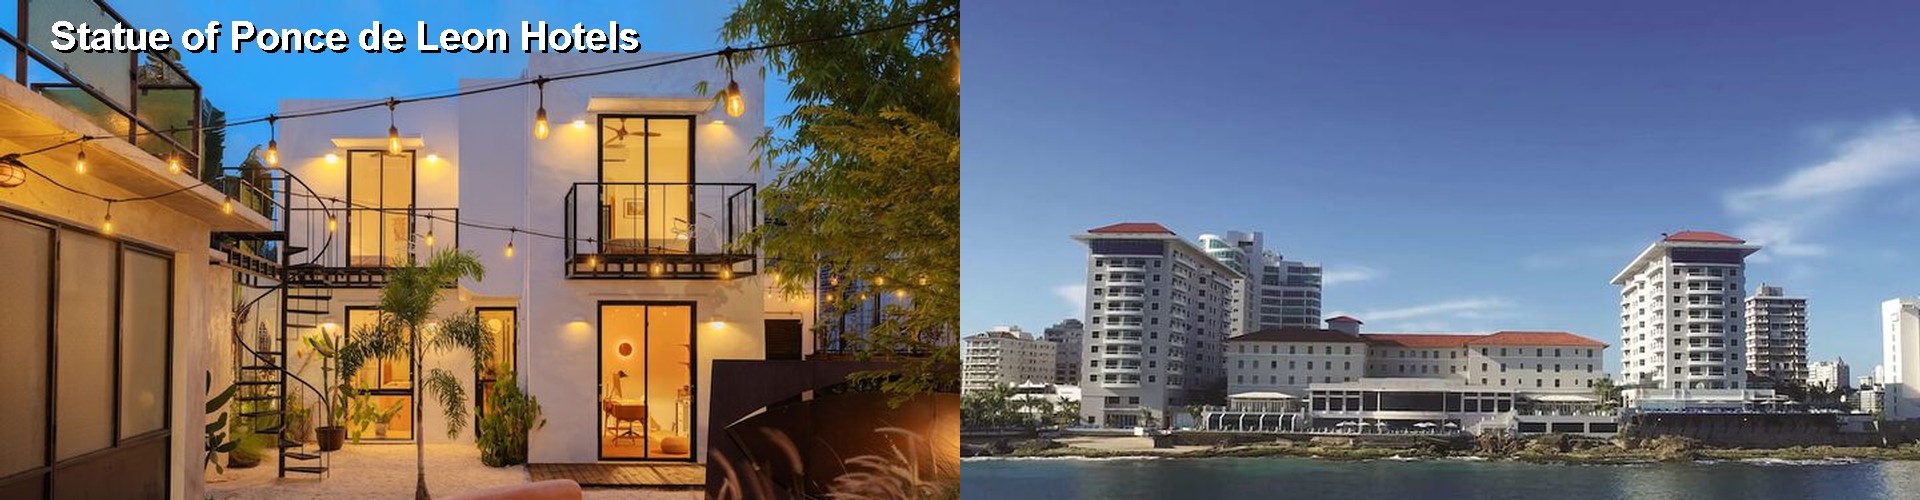 5 Best Hotels near Statue of Ponce de Leon